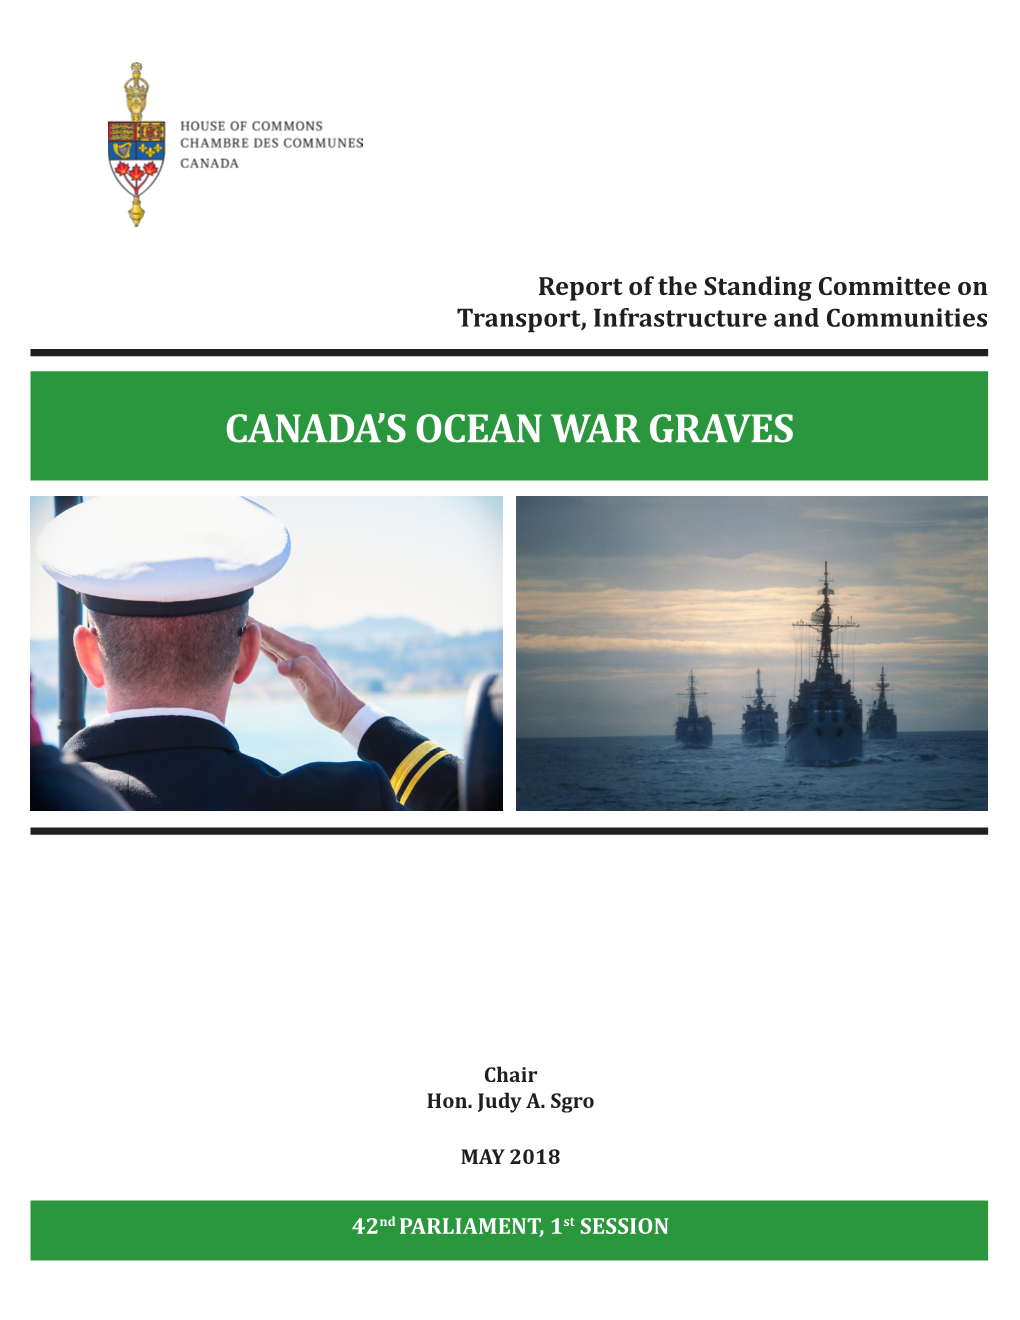 Canada's Ocean War Graves